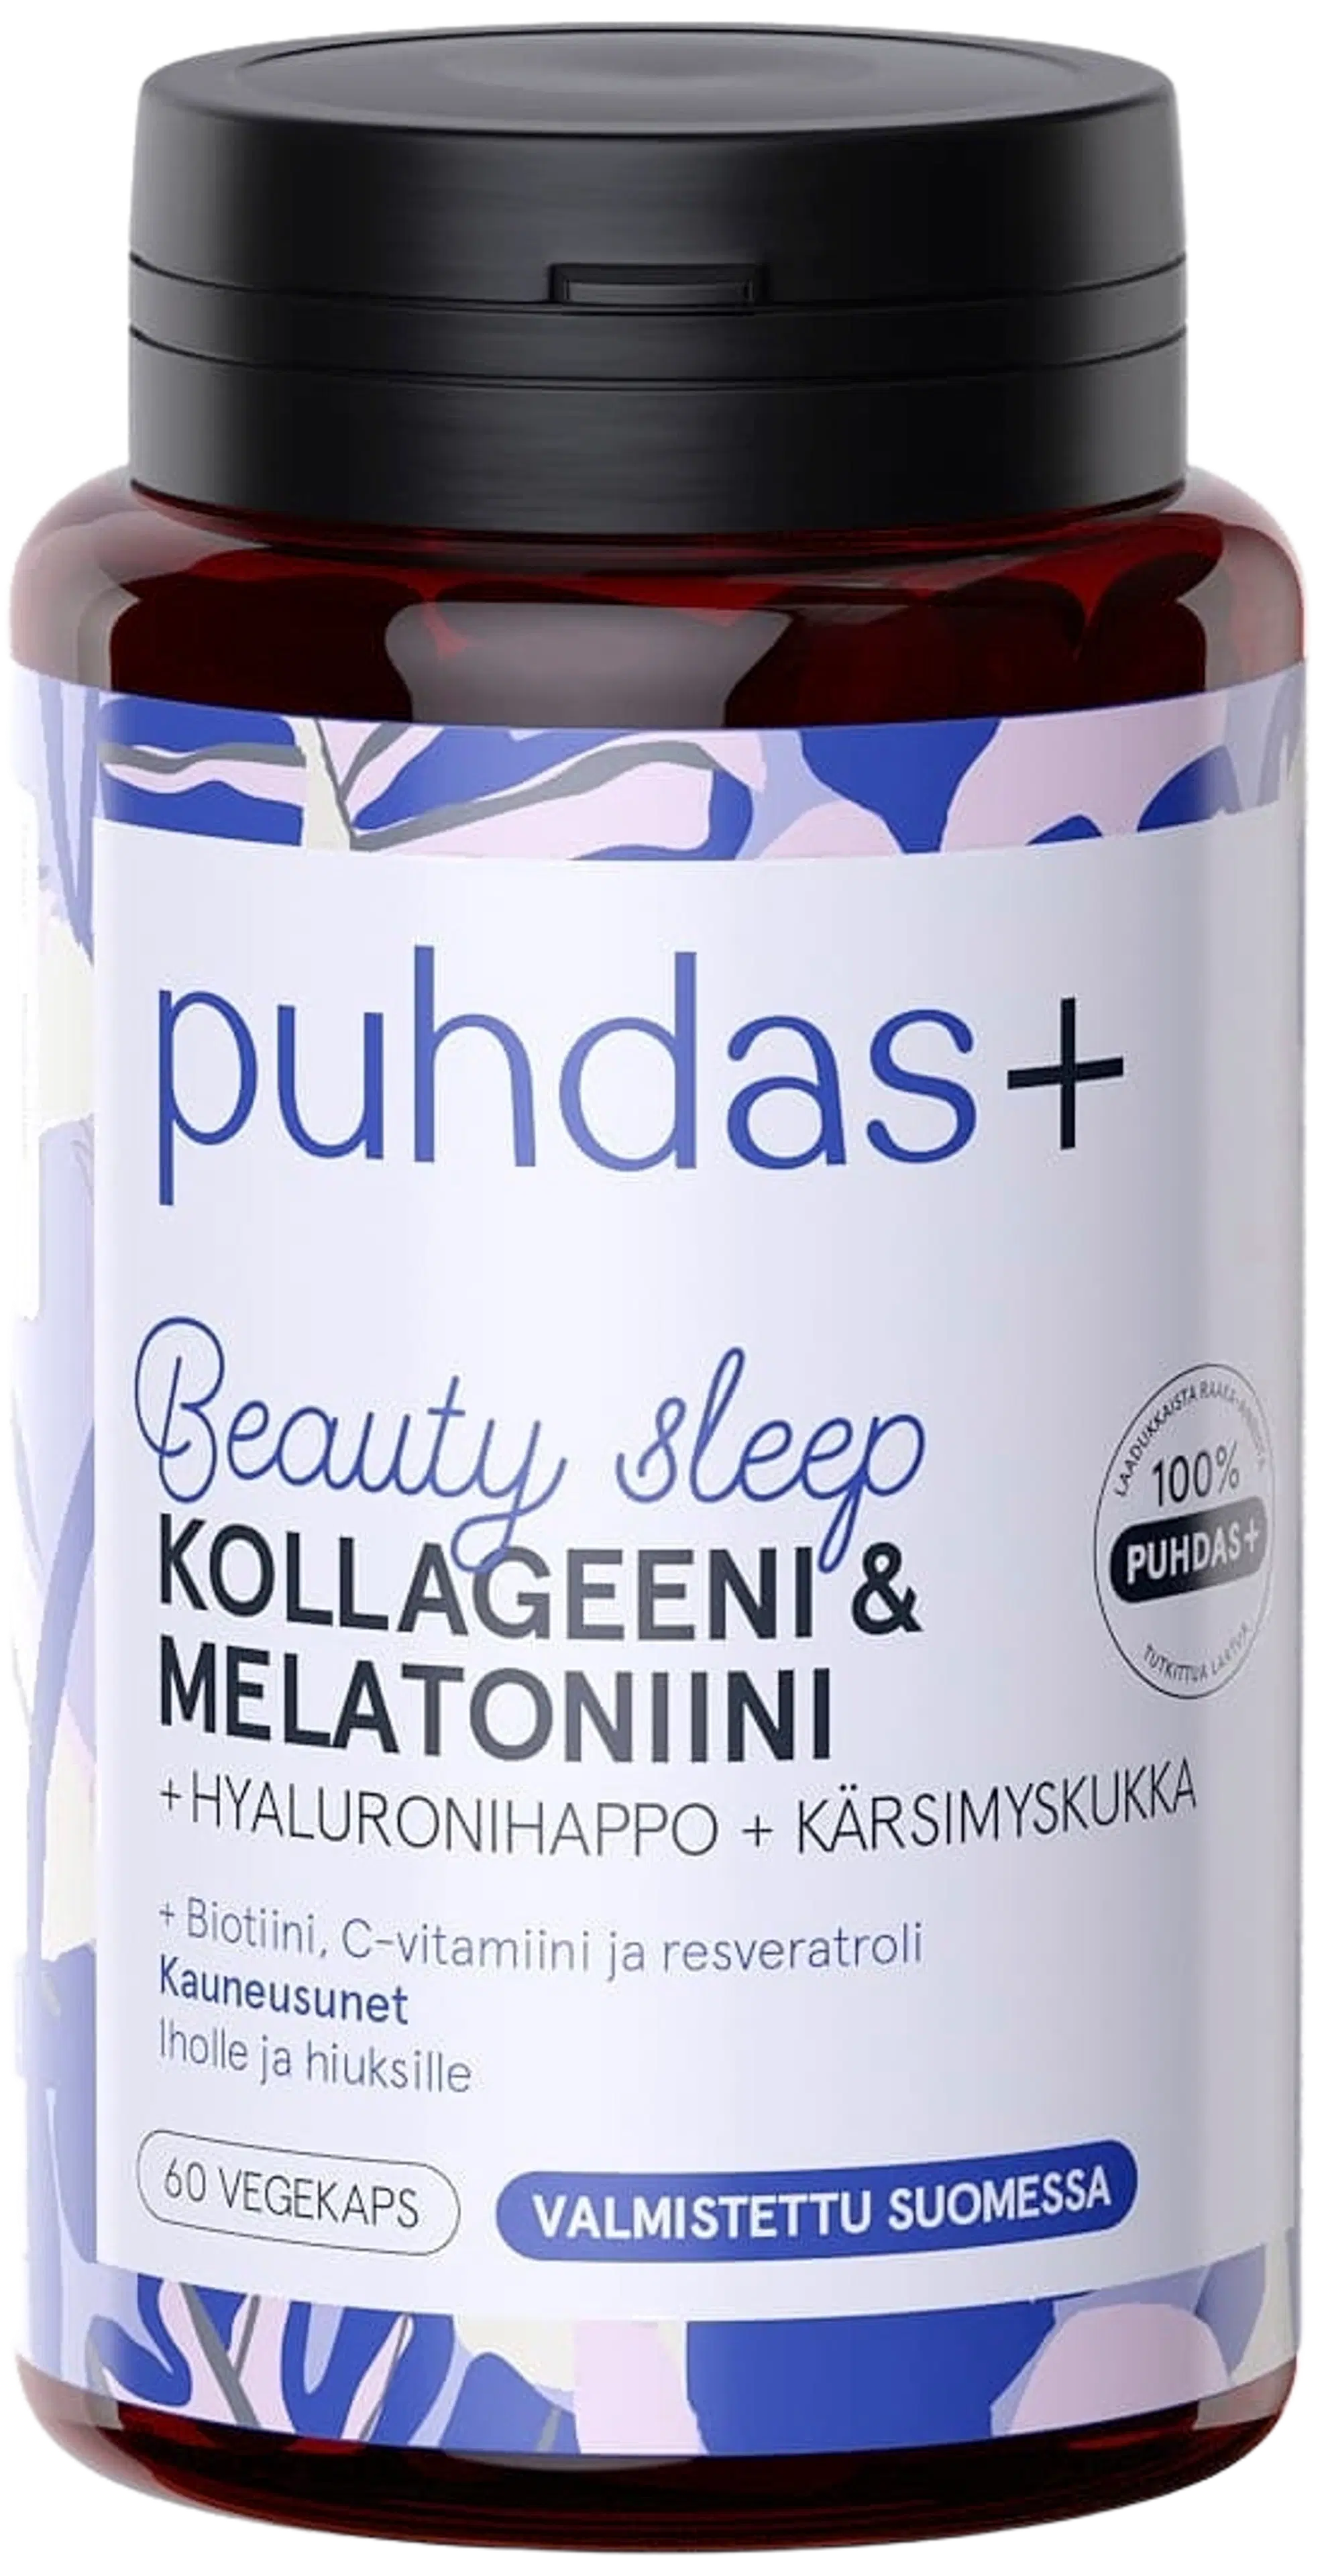 Puhdas+ Beauty sleep kollageeni & melatoniini 26g/60 kaps